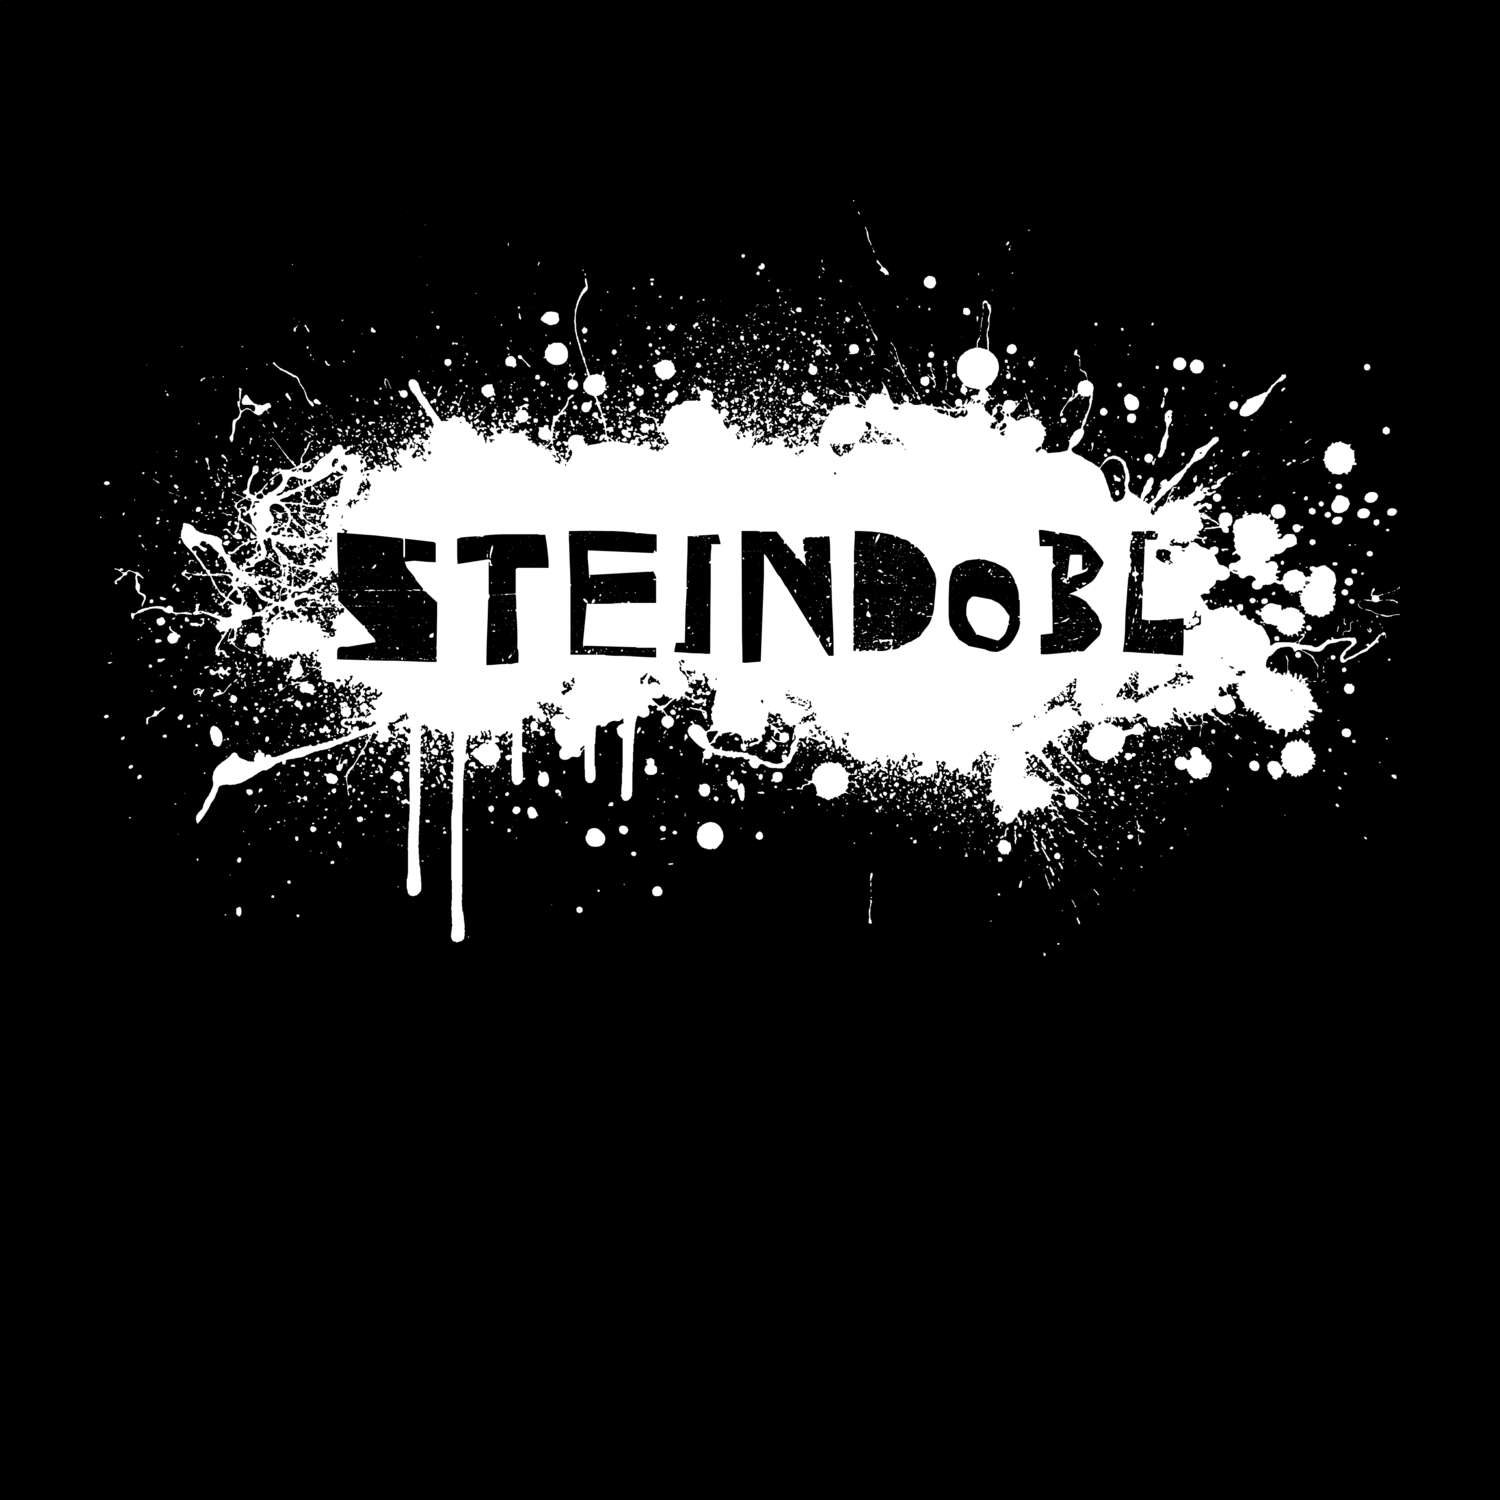 Steindobl T-Shirt »Paint Splash Punk«